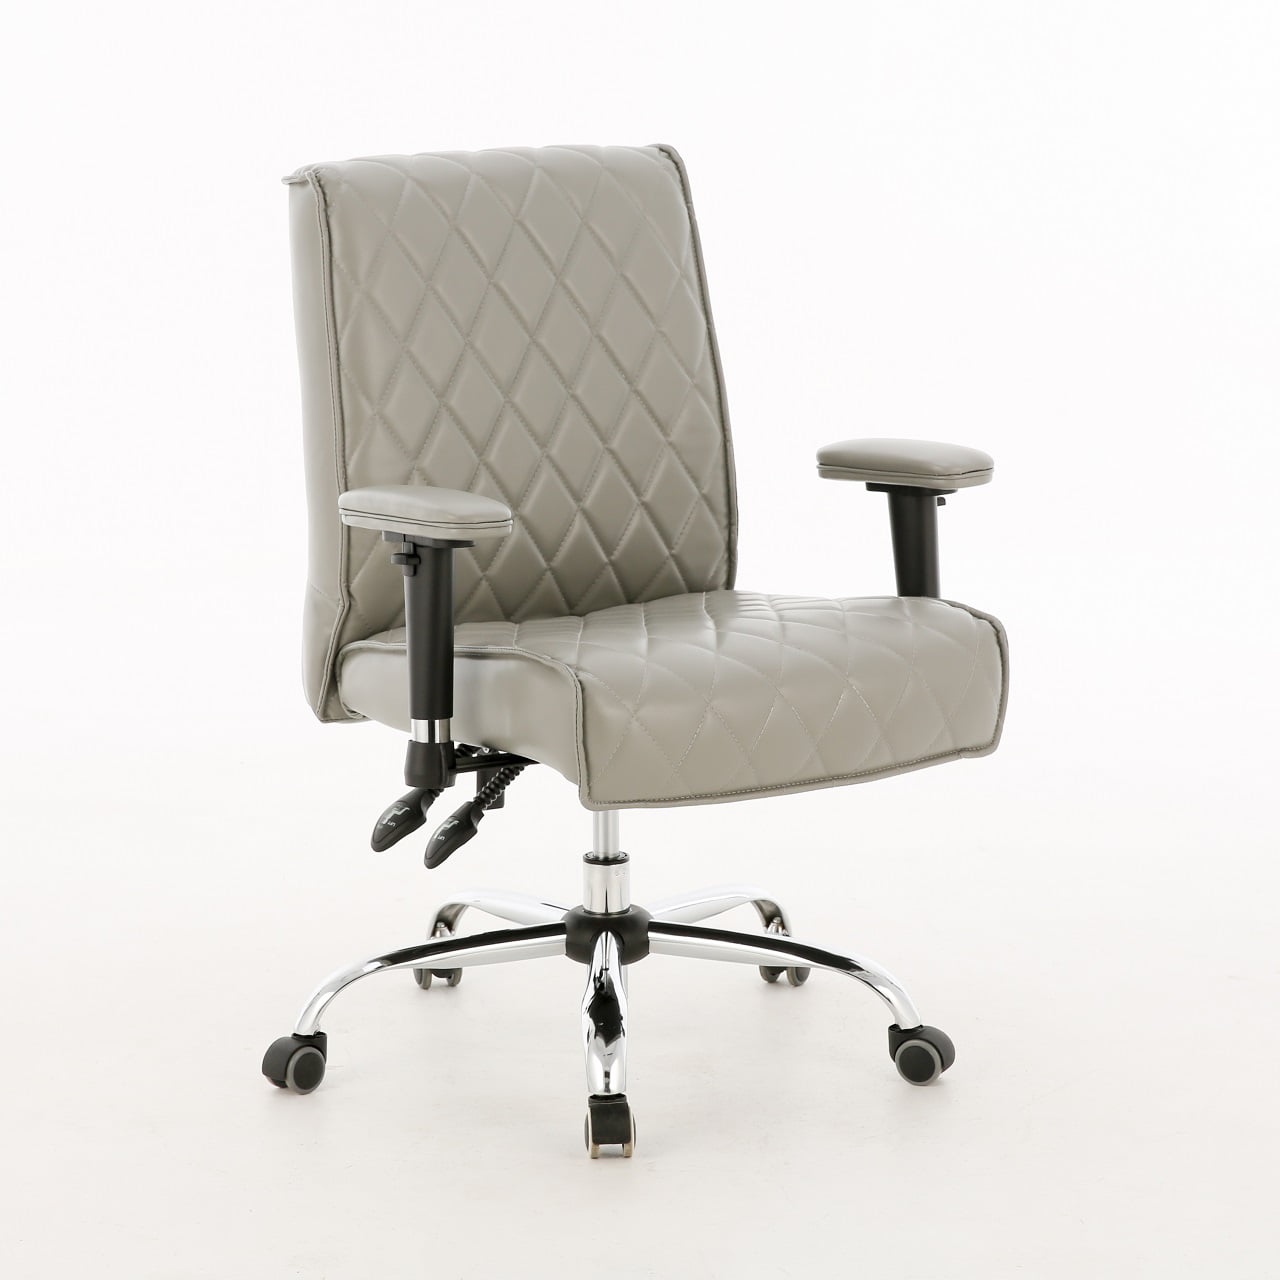 DELIA Stylish Comfortable Office Desk Chair, Customer Rolling Seat